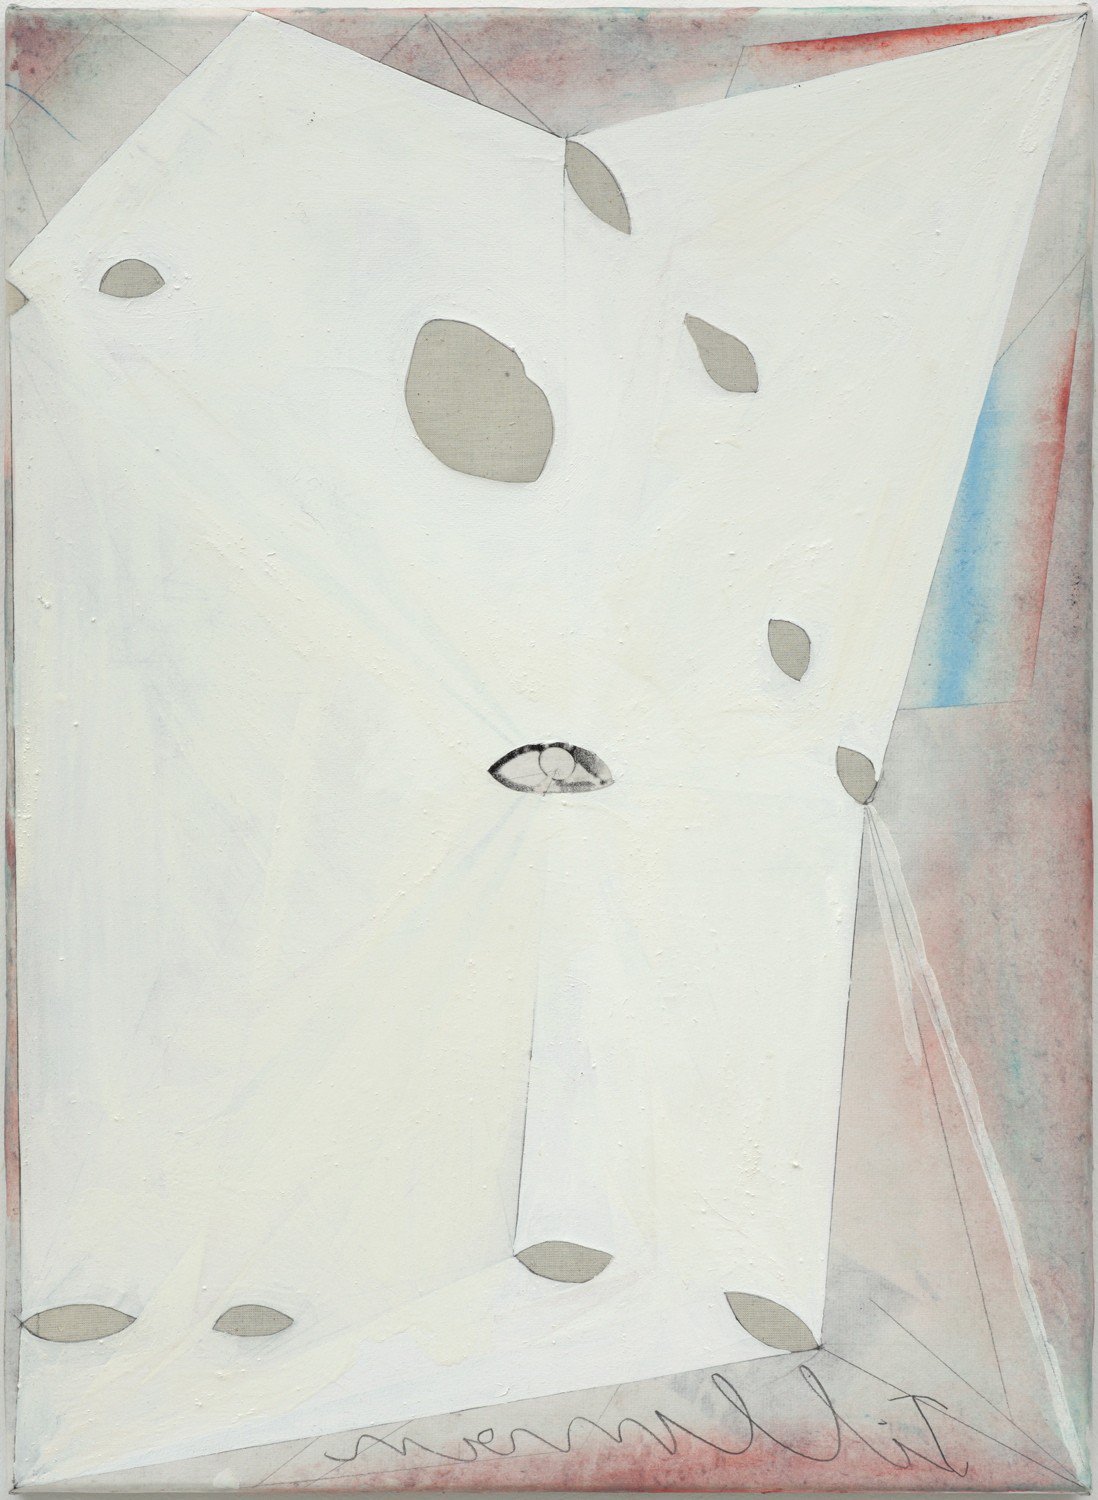 Tillman KaiserUntitled, 2009Tempera, silkscreen on canvas55 x 40 cm